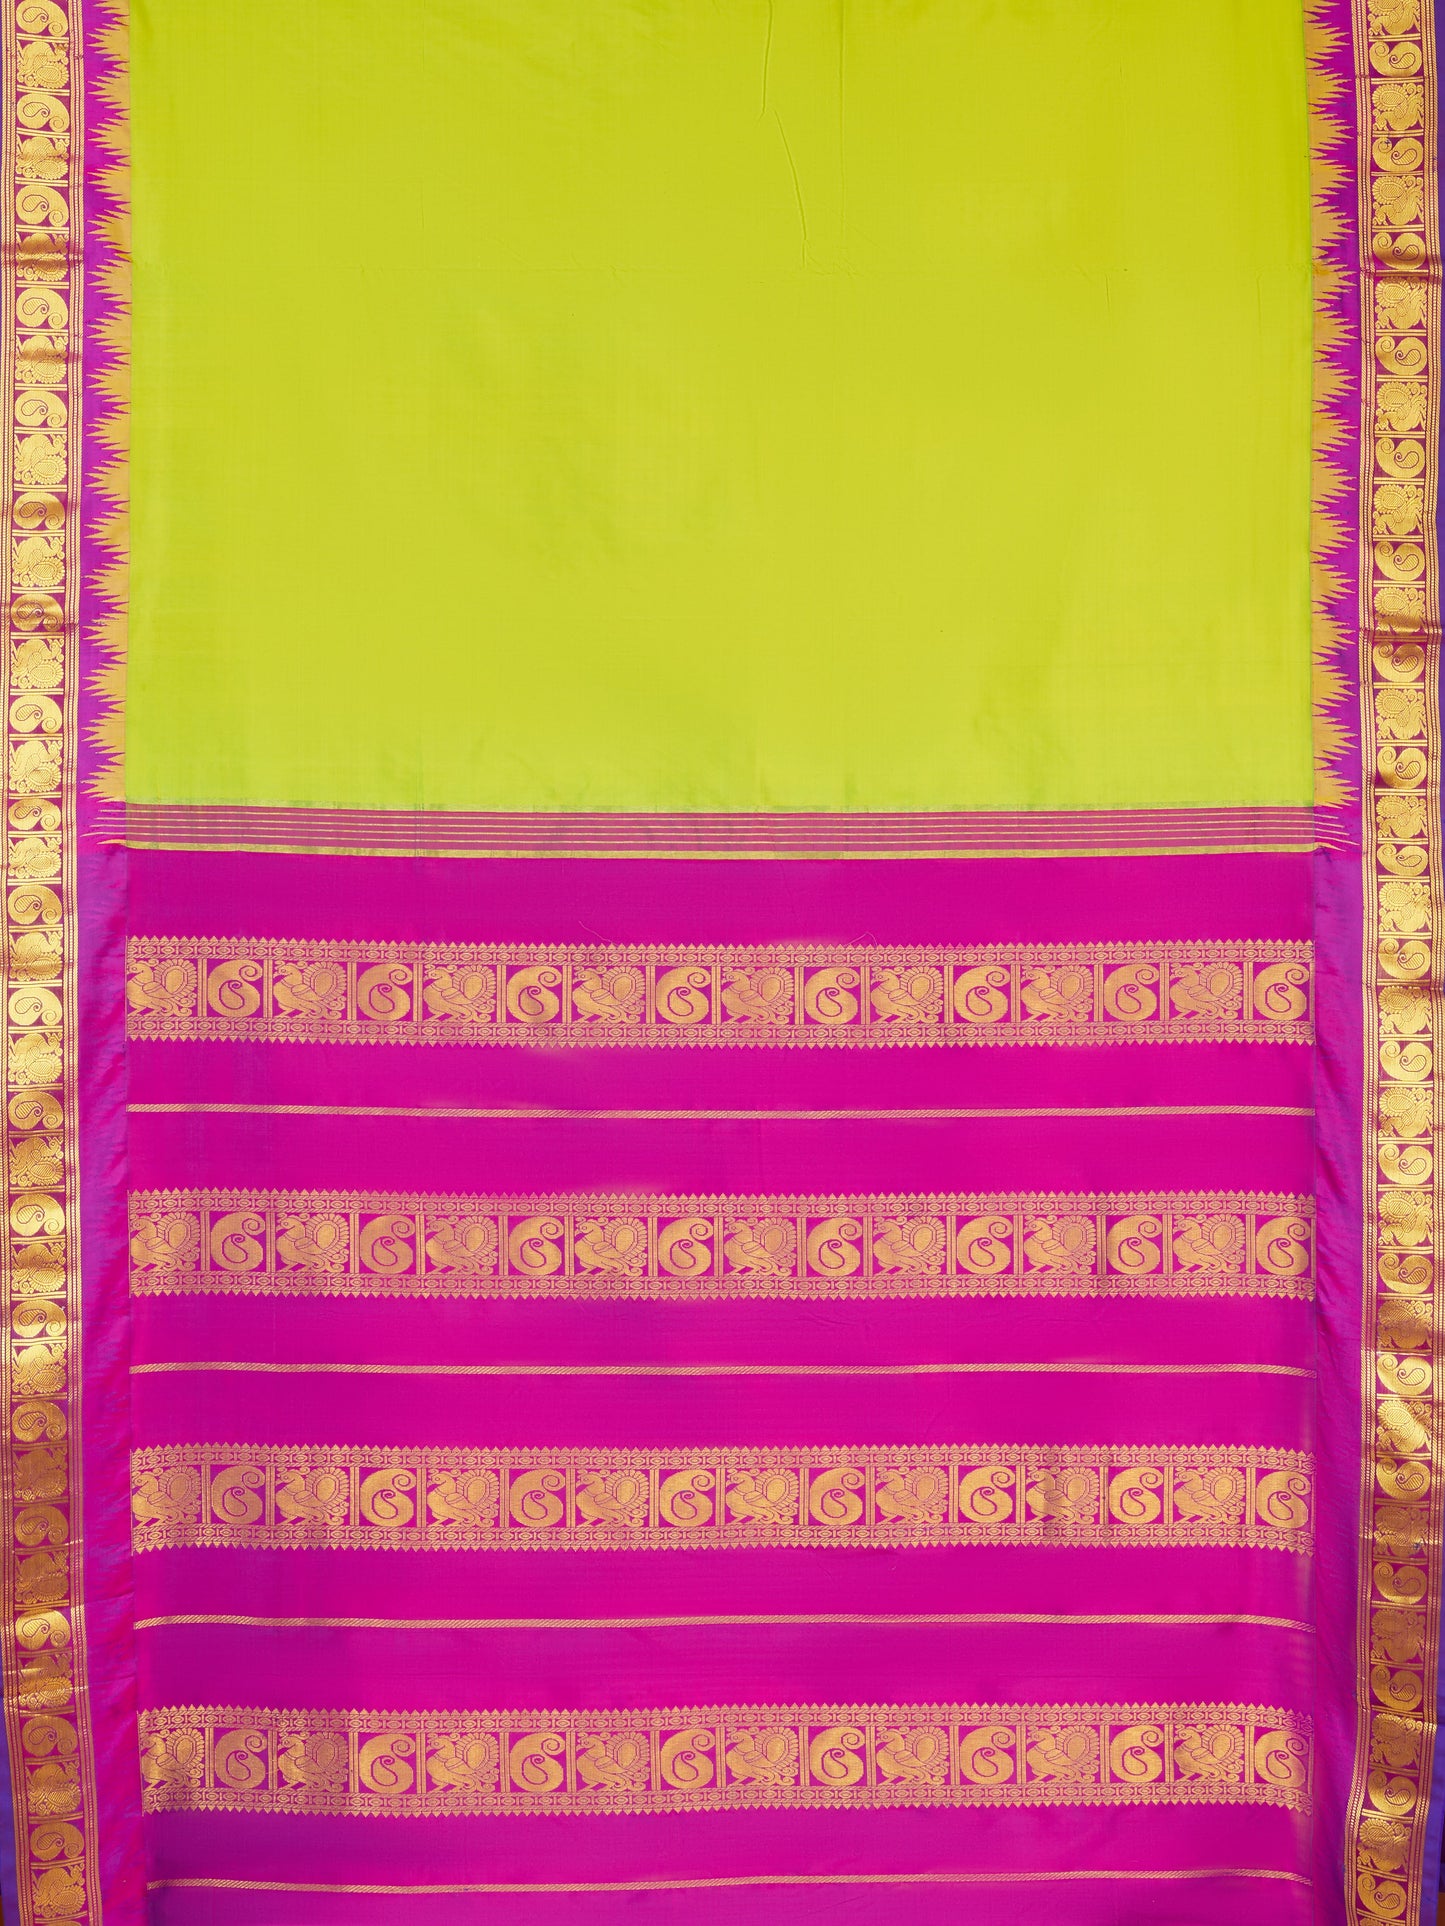 Sneha Green with Purple 9 Yards Kanchivaram Silk Saree